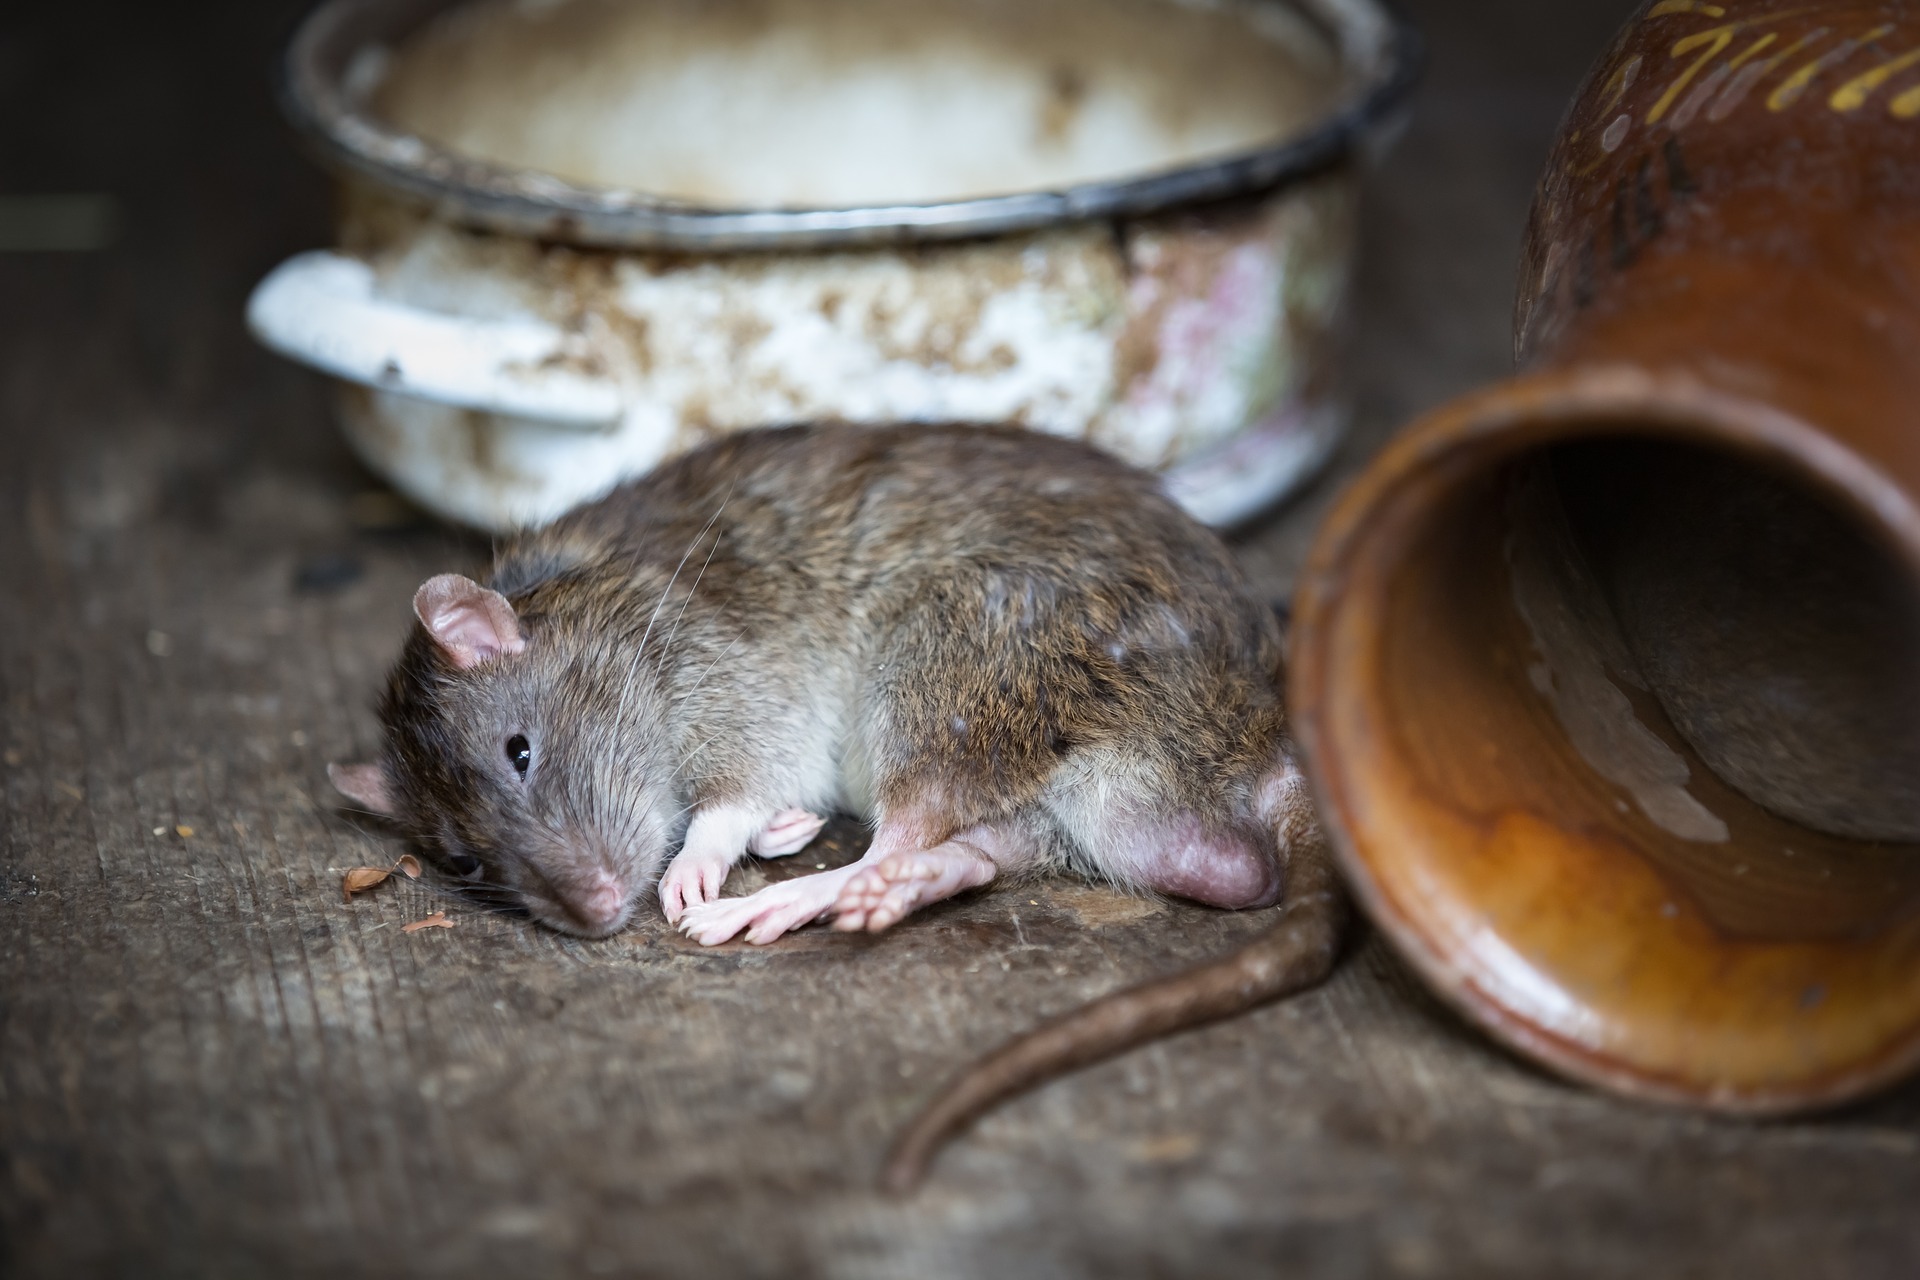 Rat by a bowl